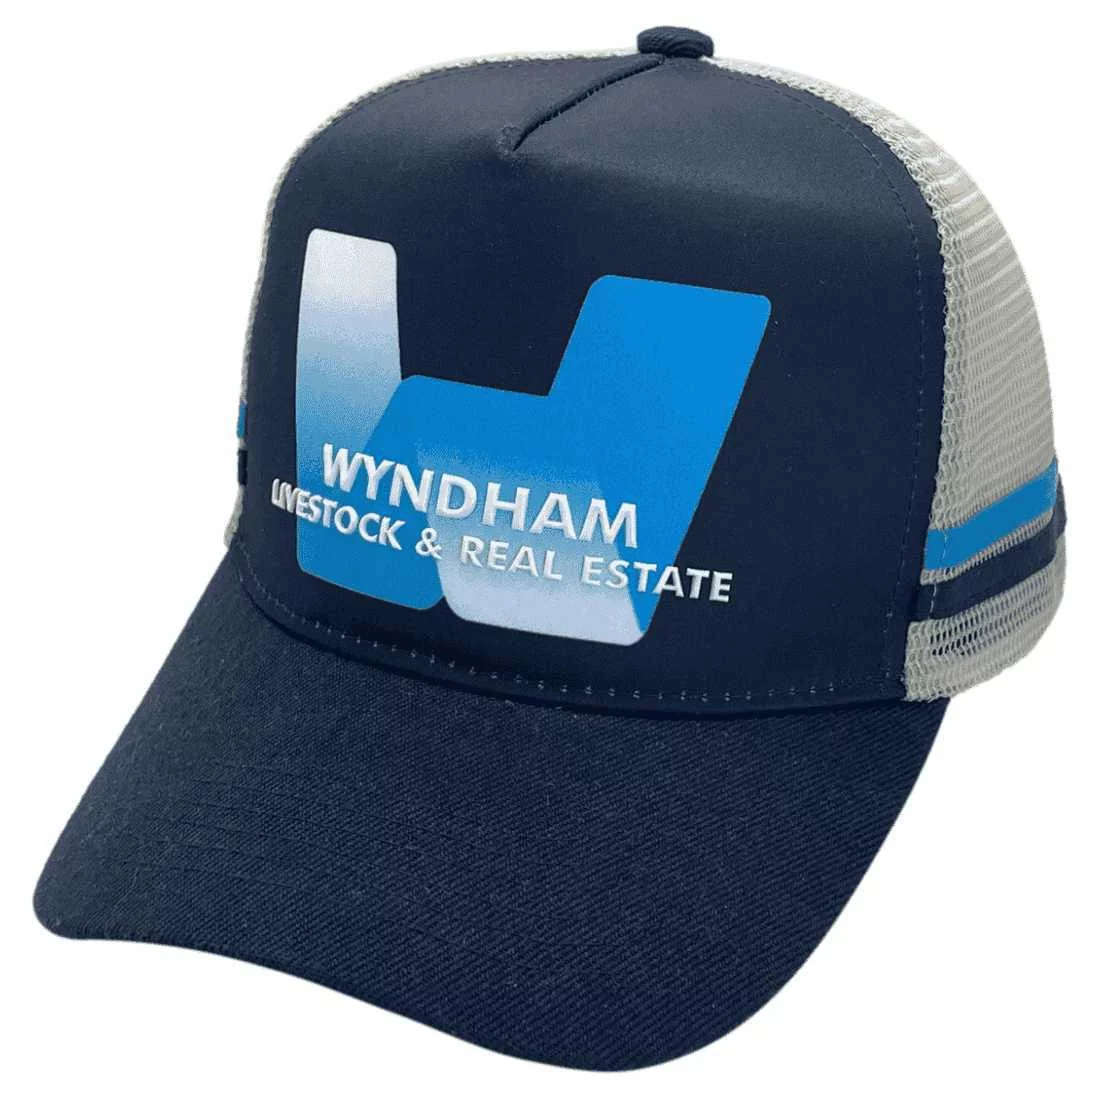 Wyndham Livestock & Real Estate HP Original Midrange Aussie Trucker Hat with double side bands Acrylic Navy Grey Aqua